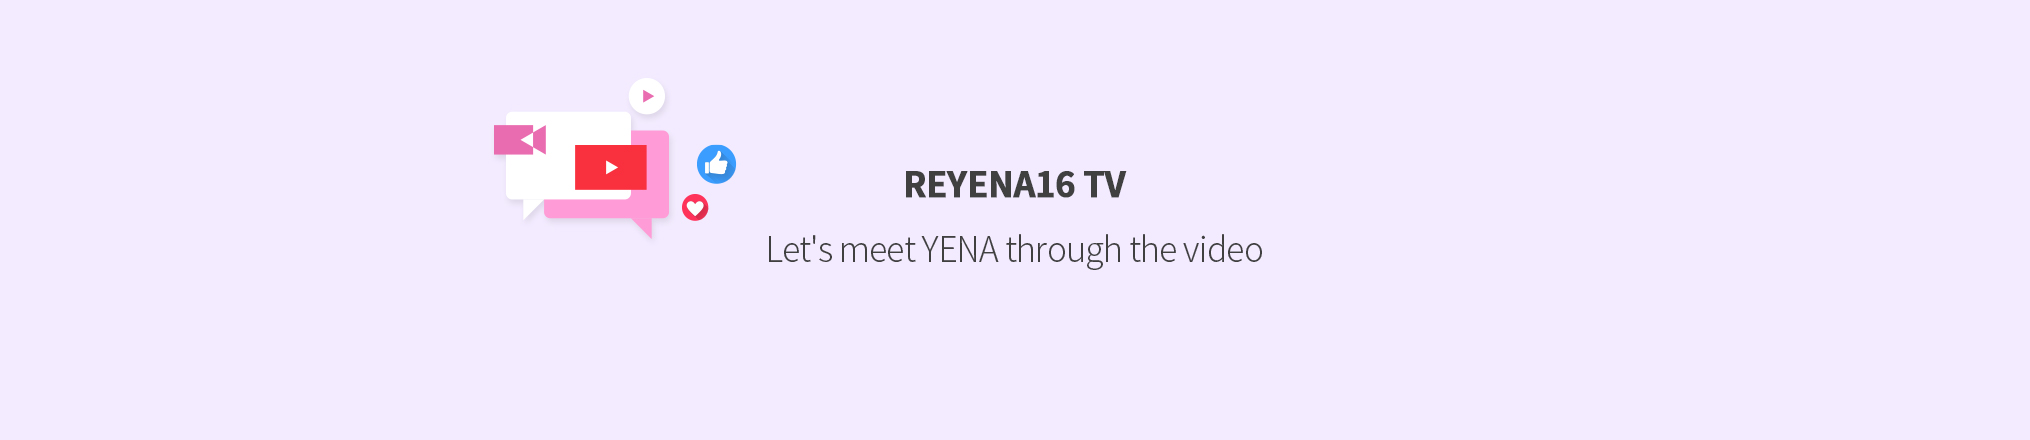 REYENA16 TV